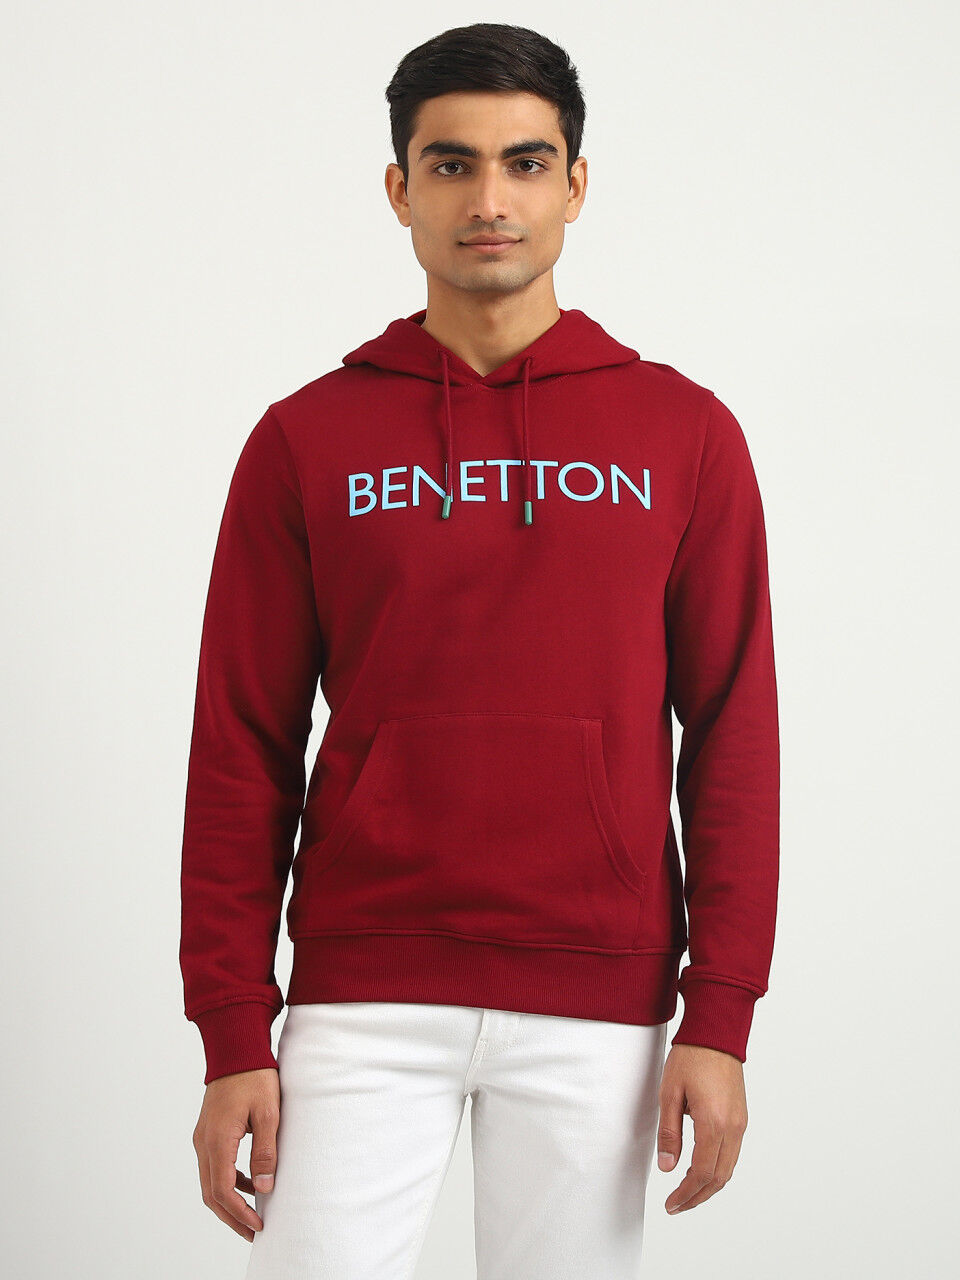 Benetton sweatshirt HERREN Pullovers & Sweatshirts Ohne Kapuze Rabatt 91 % Grün M 